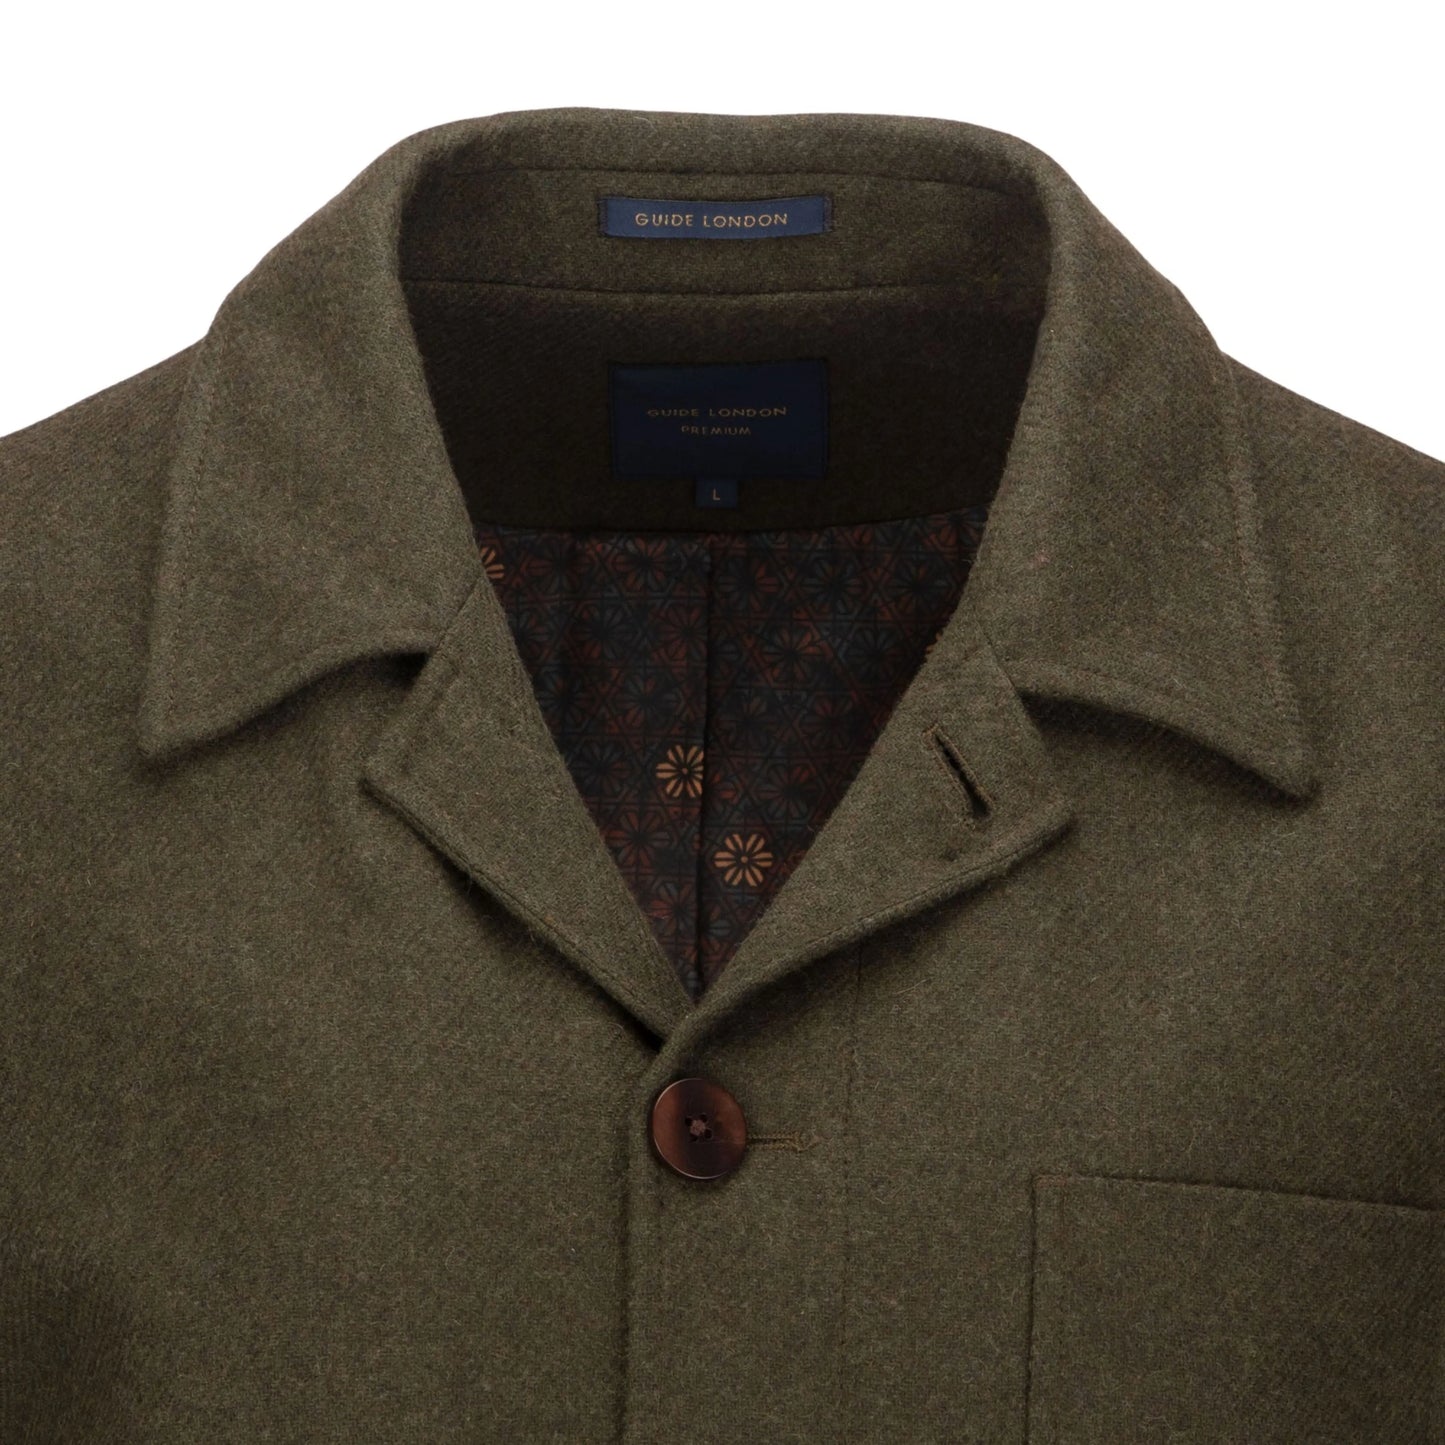 Buy Guide London Wool Overshirt Jacket - Olive Green | Overshirtss at Woven Durham